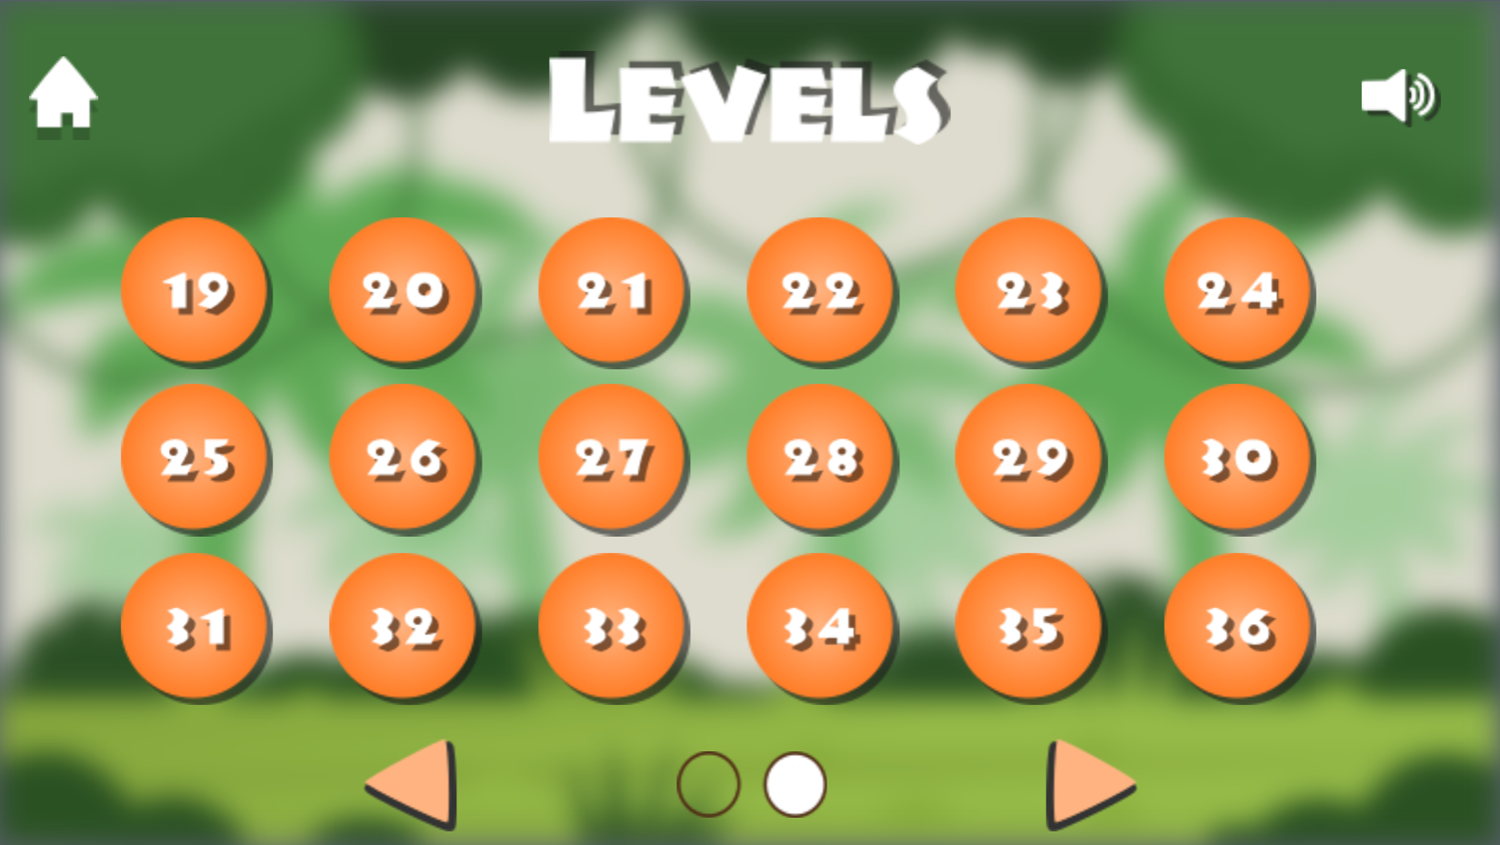 Monkeys and Fruits Game Level Select Screen Screenshot.